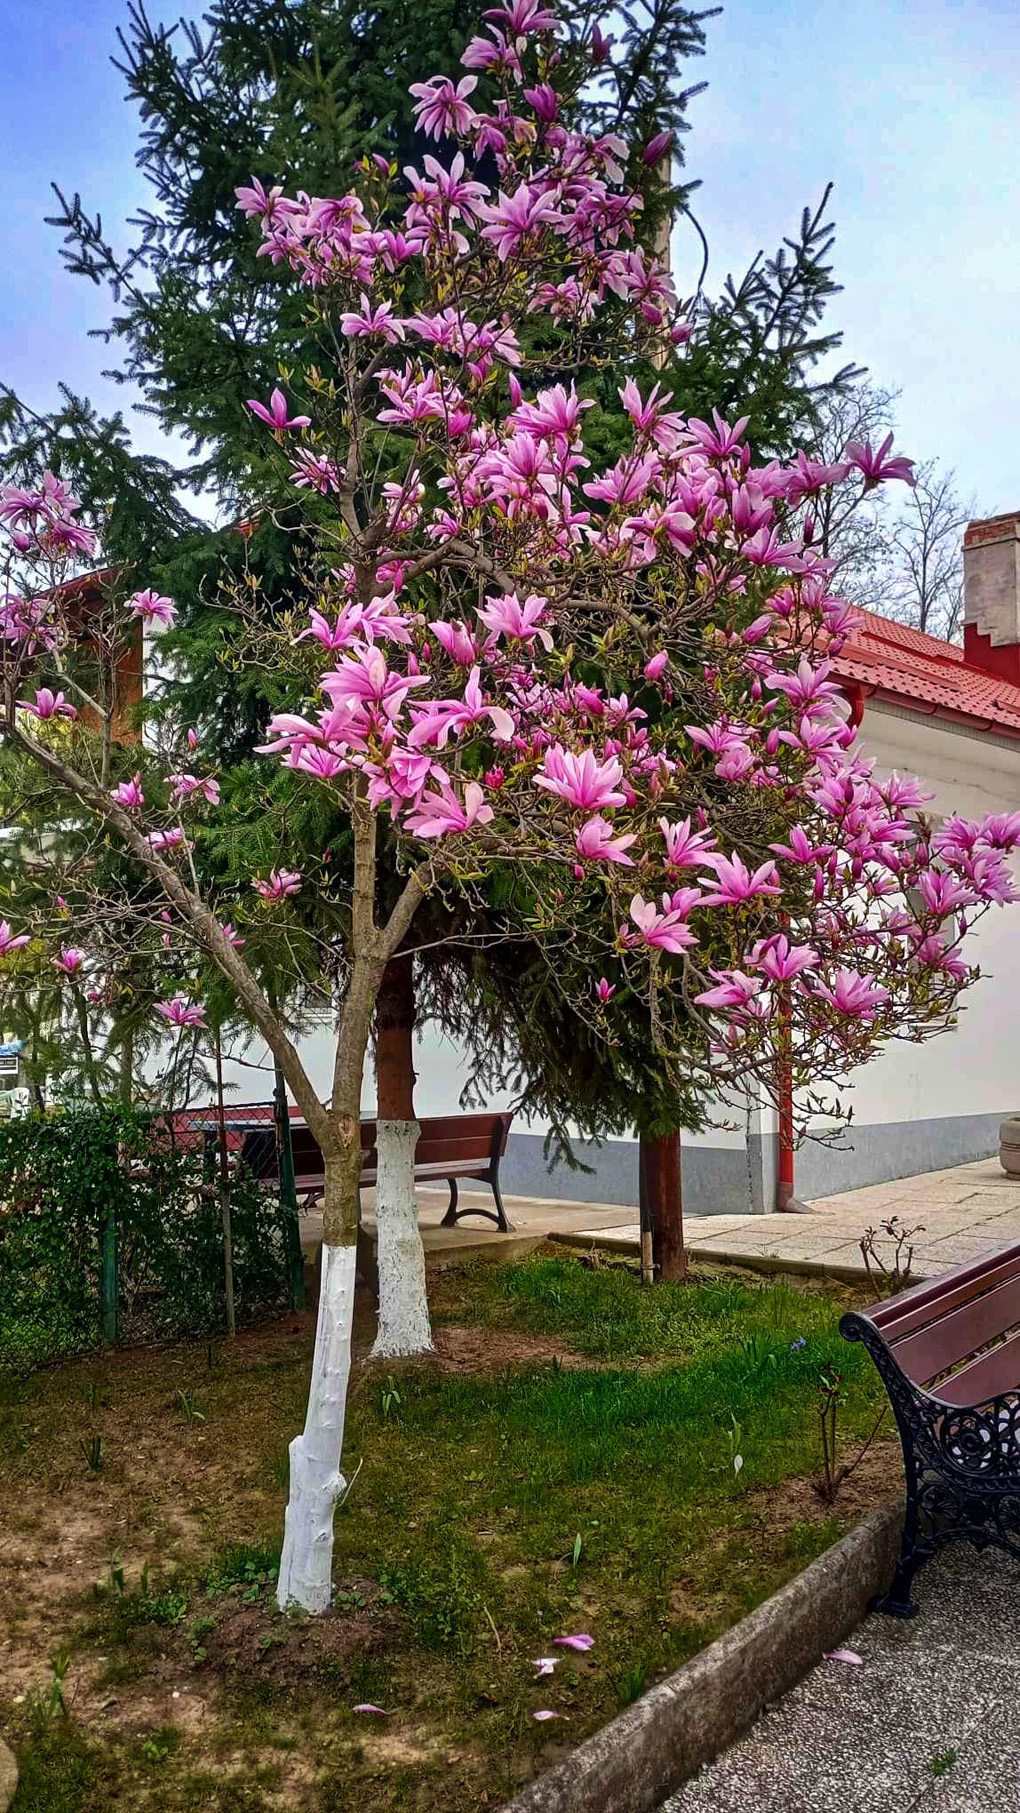 Magnolia in bloom, spring